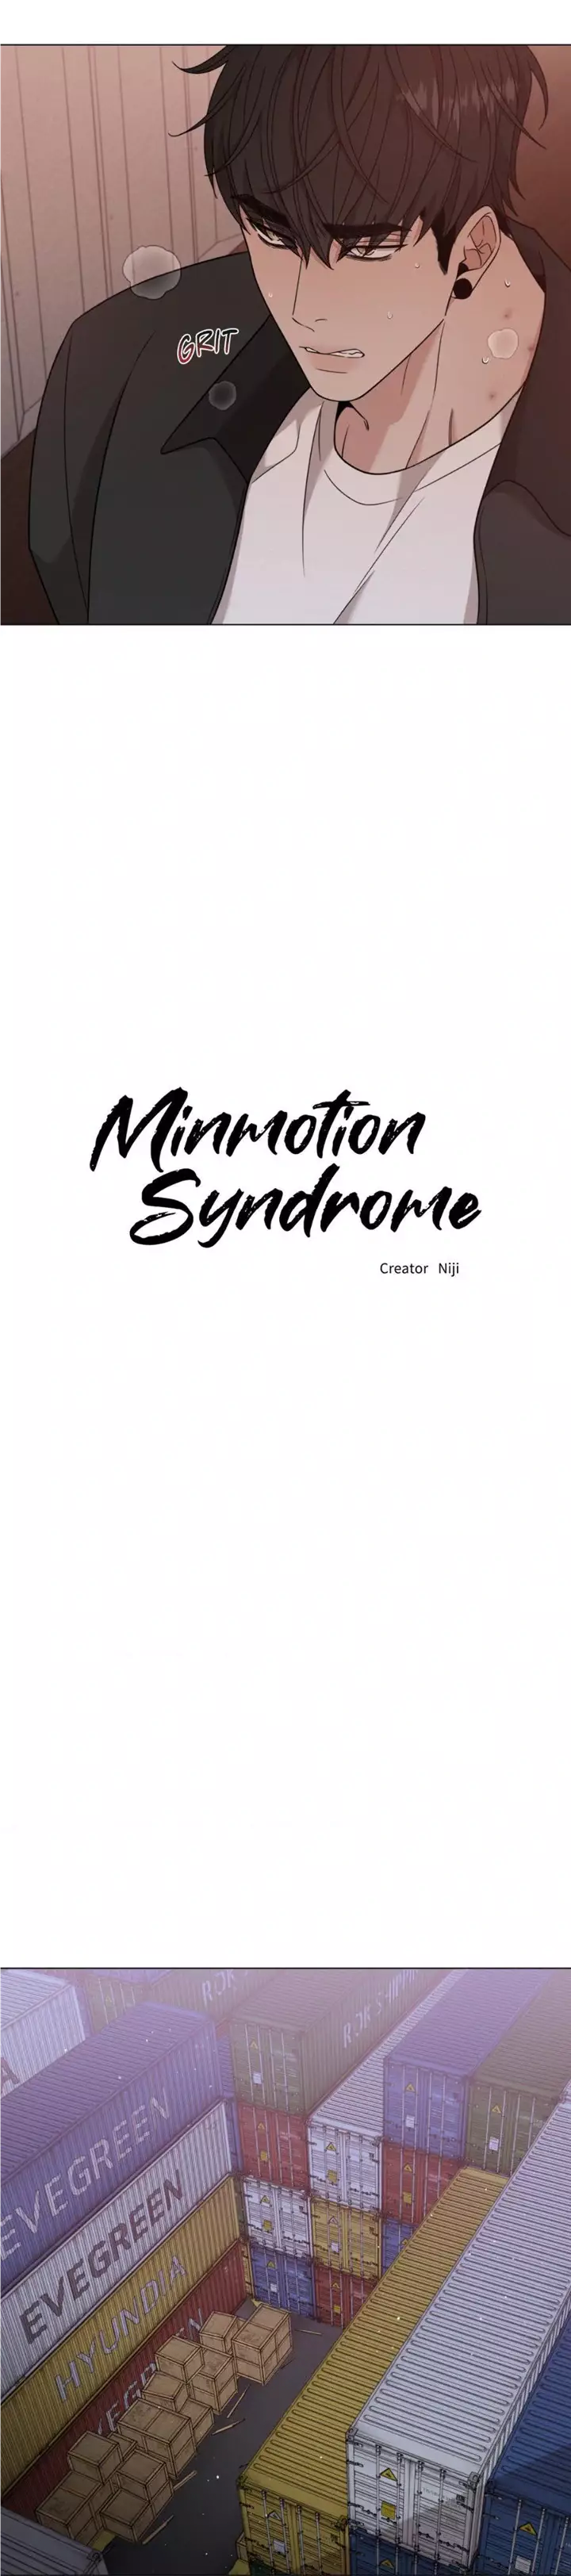 Minmotion Syndrome - 58 page 10-6ecfda22